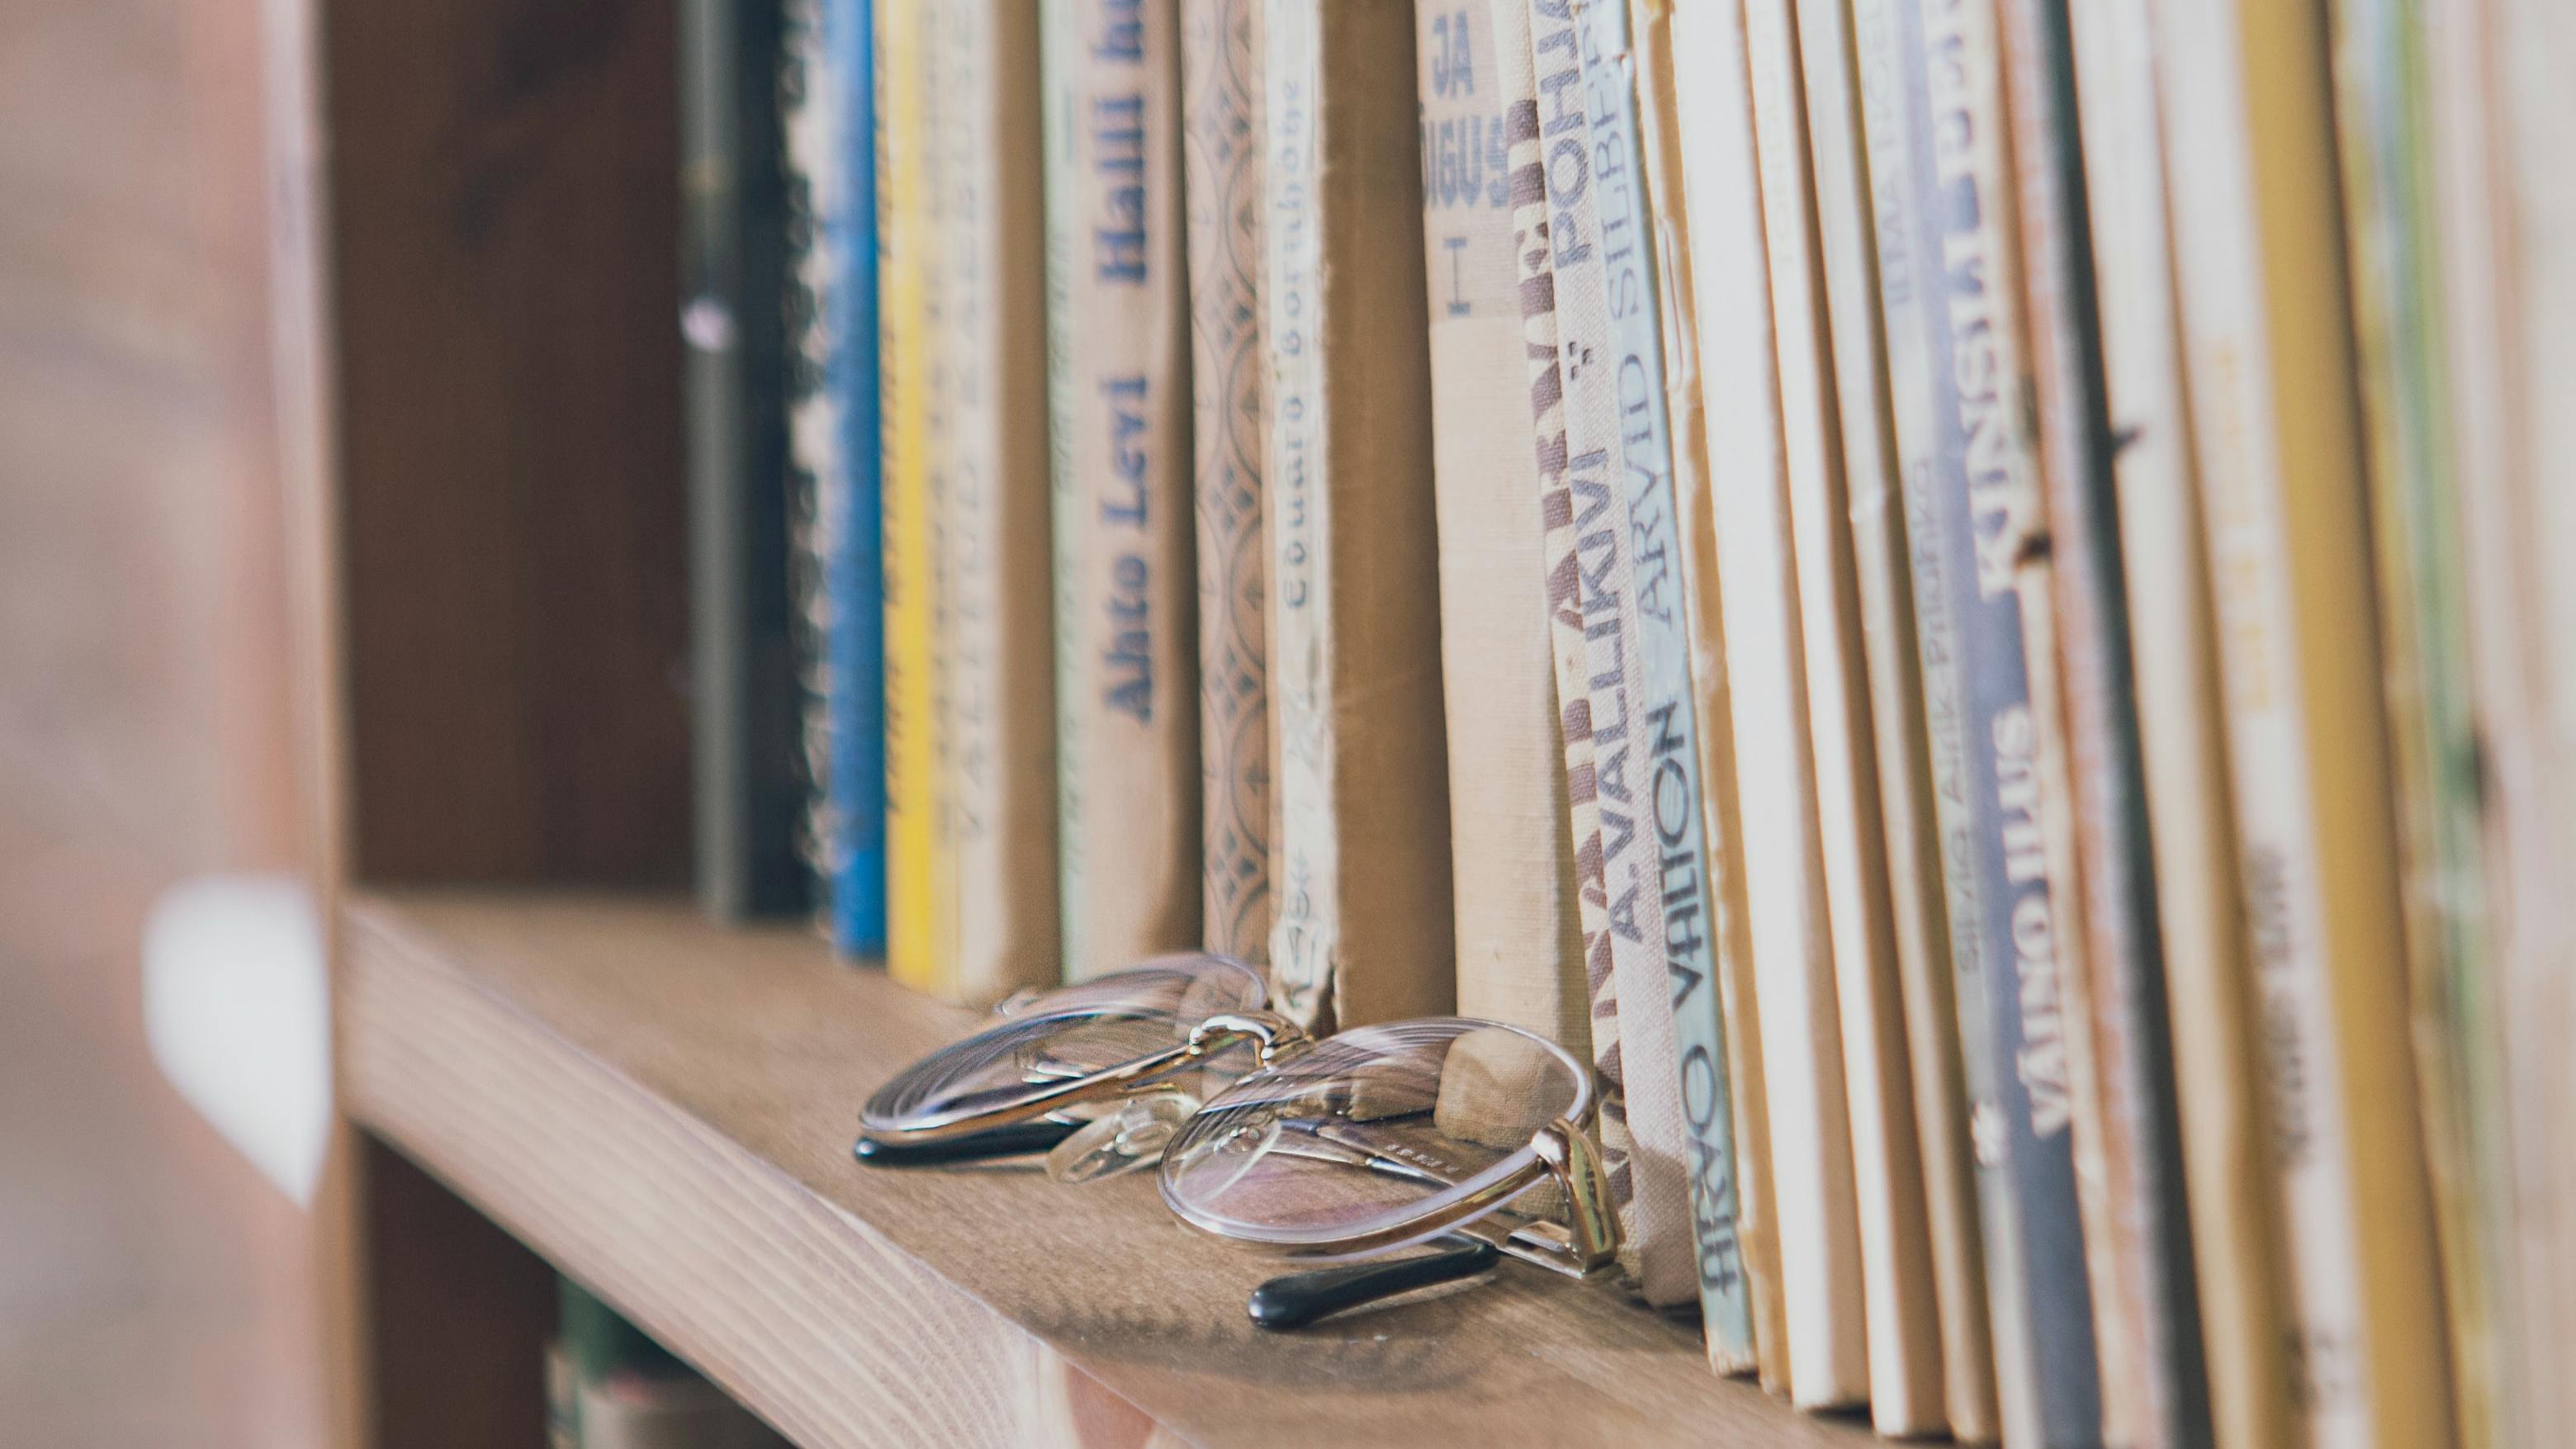 A pair of glasses sits on a bookshelf.